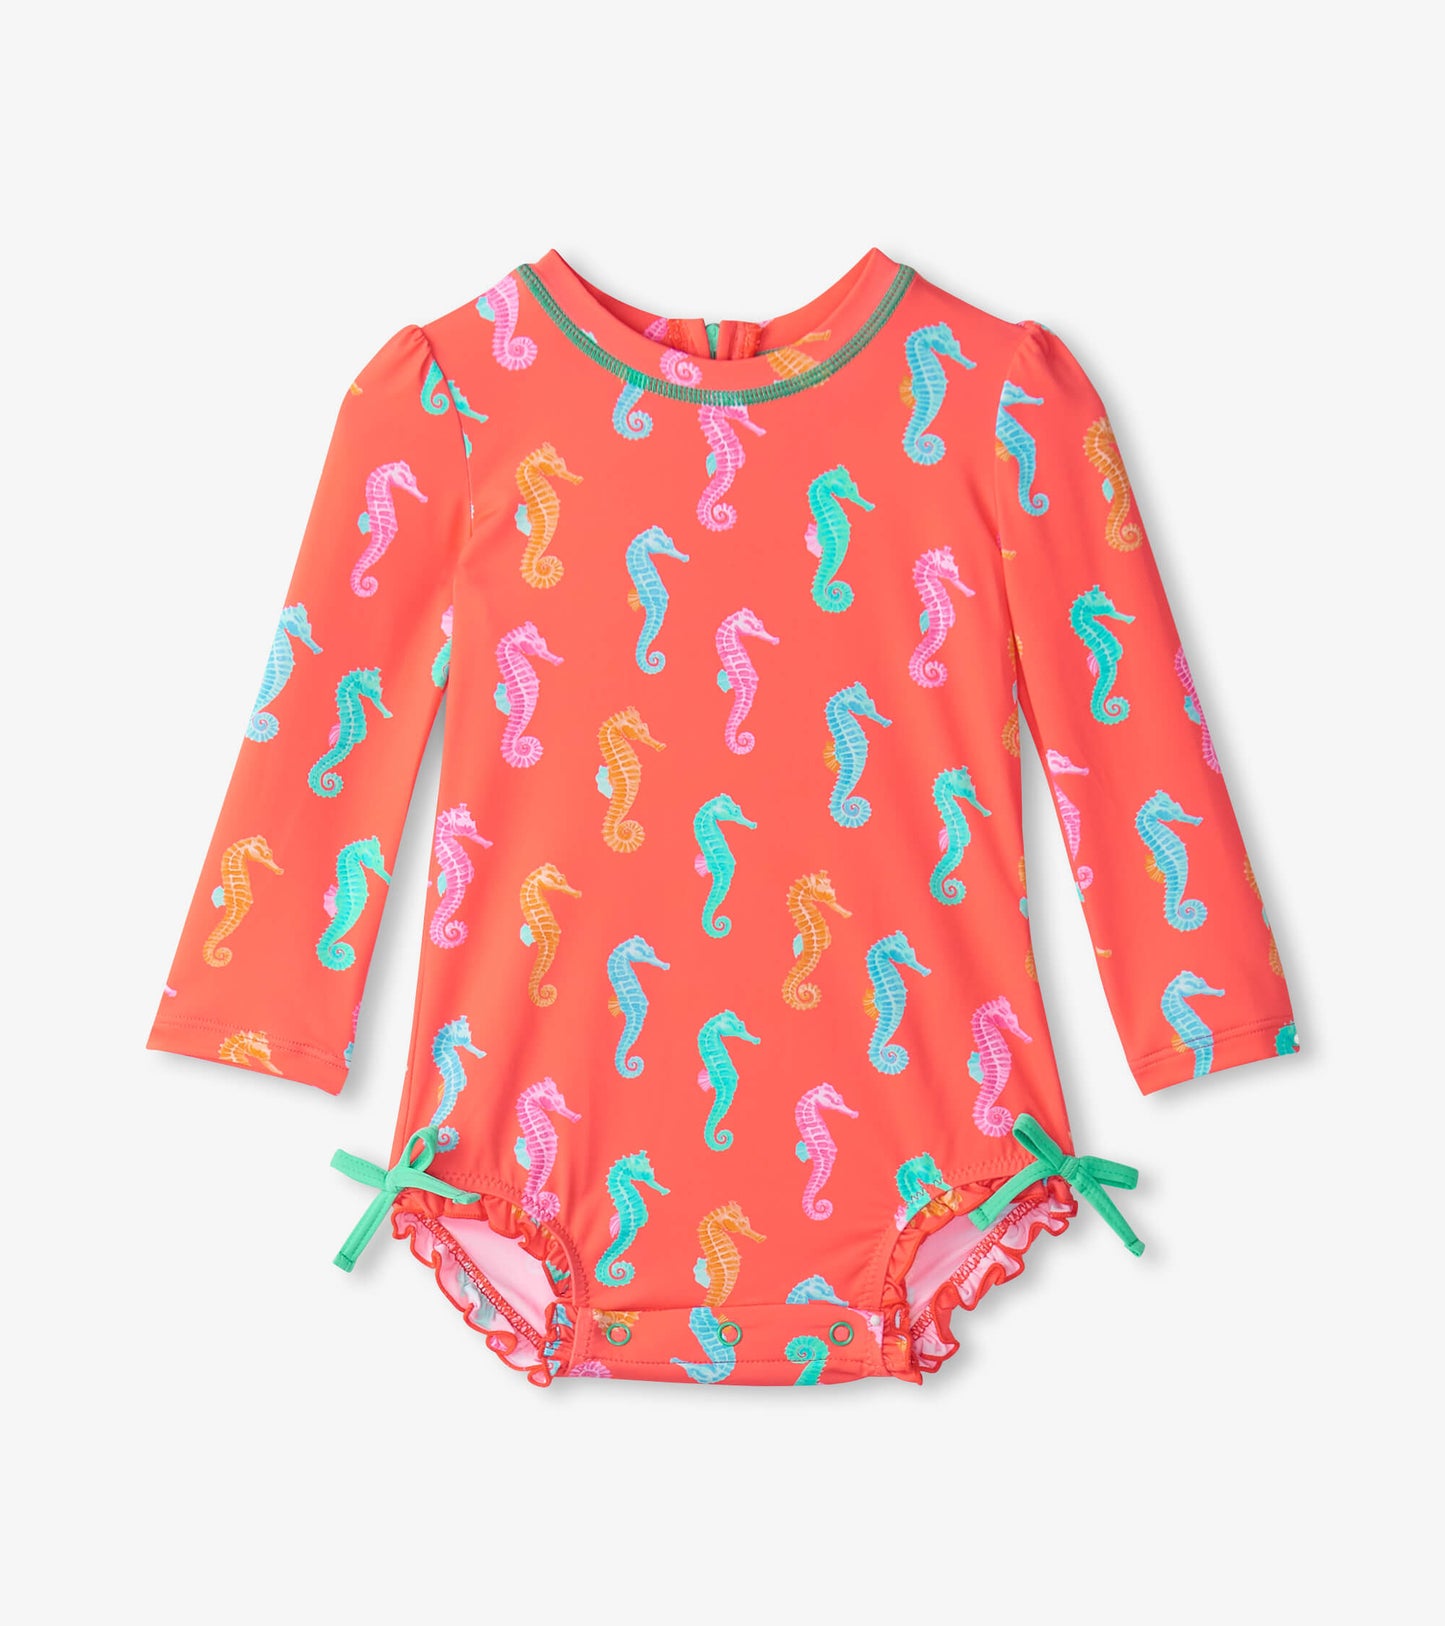 Hatley Baby Rashguard Swimsuit - Painted Seahorse